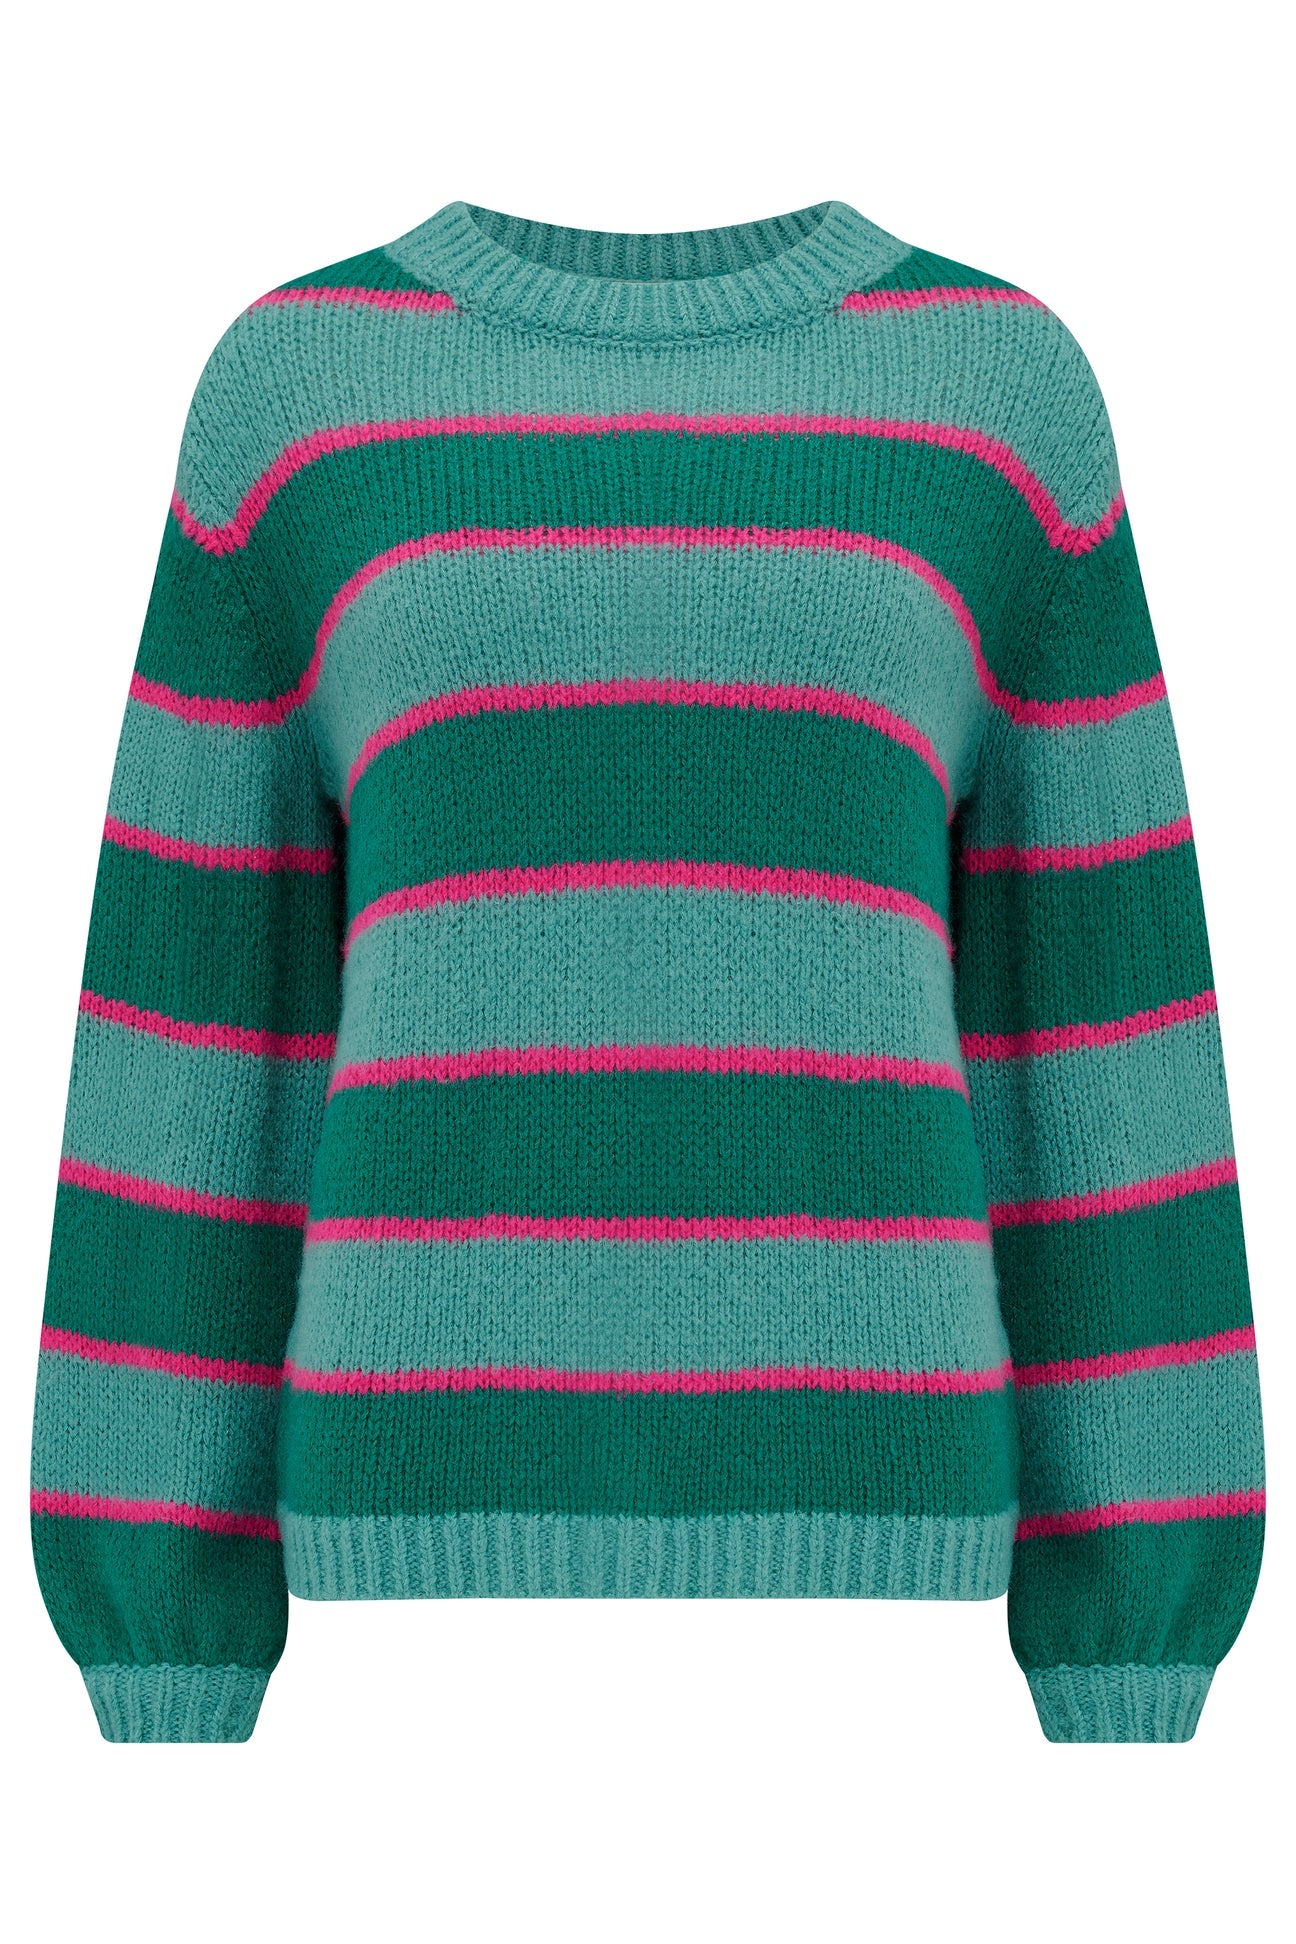 Essie Jumper - Green, Pink Highlight Stripes